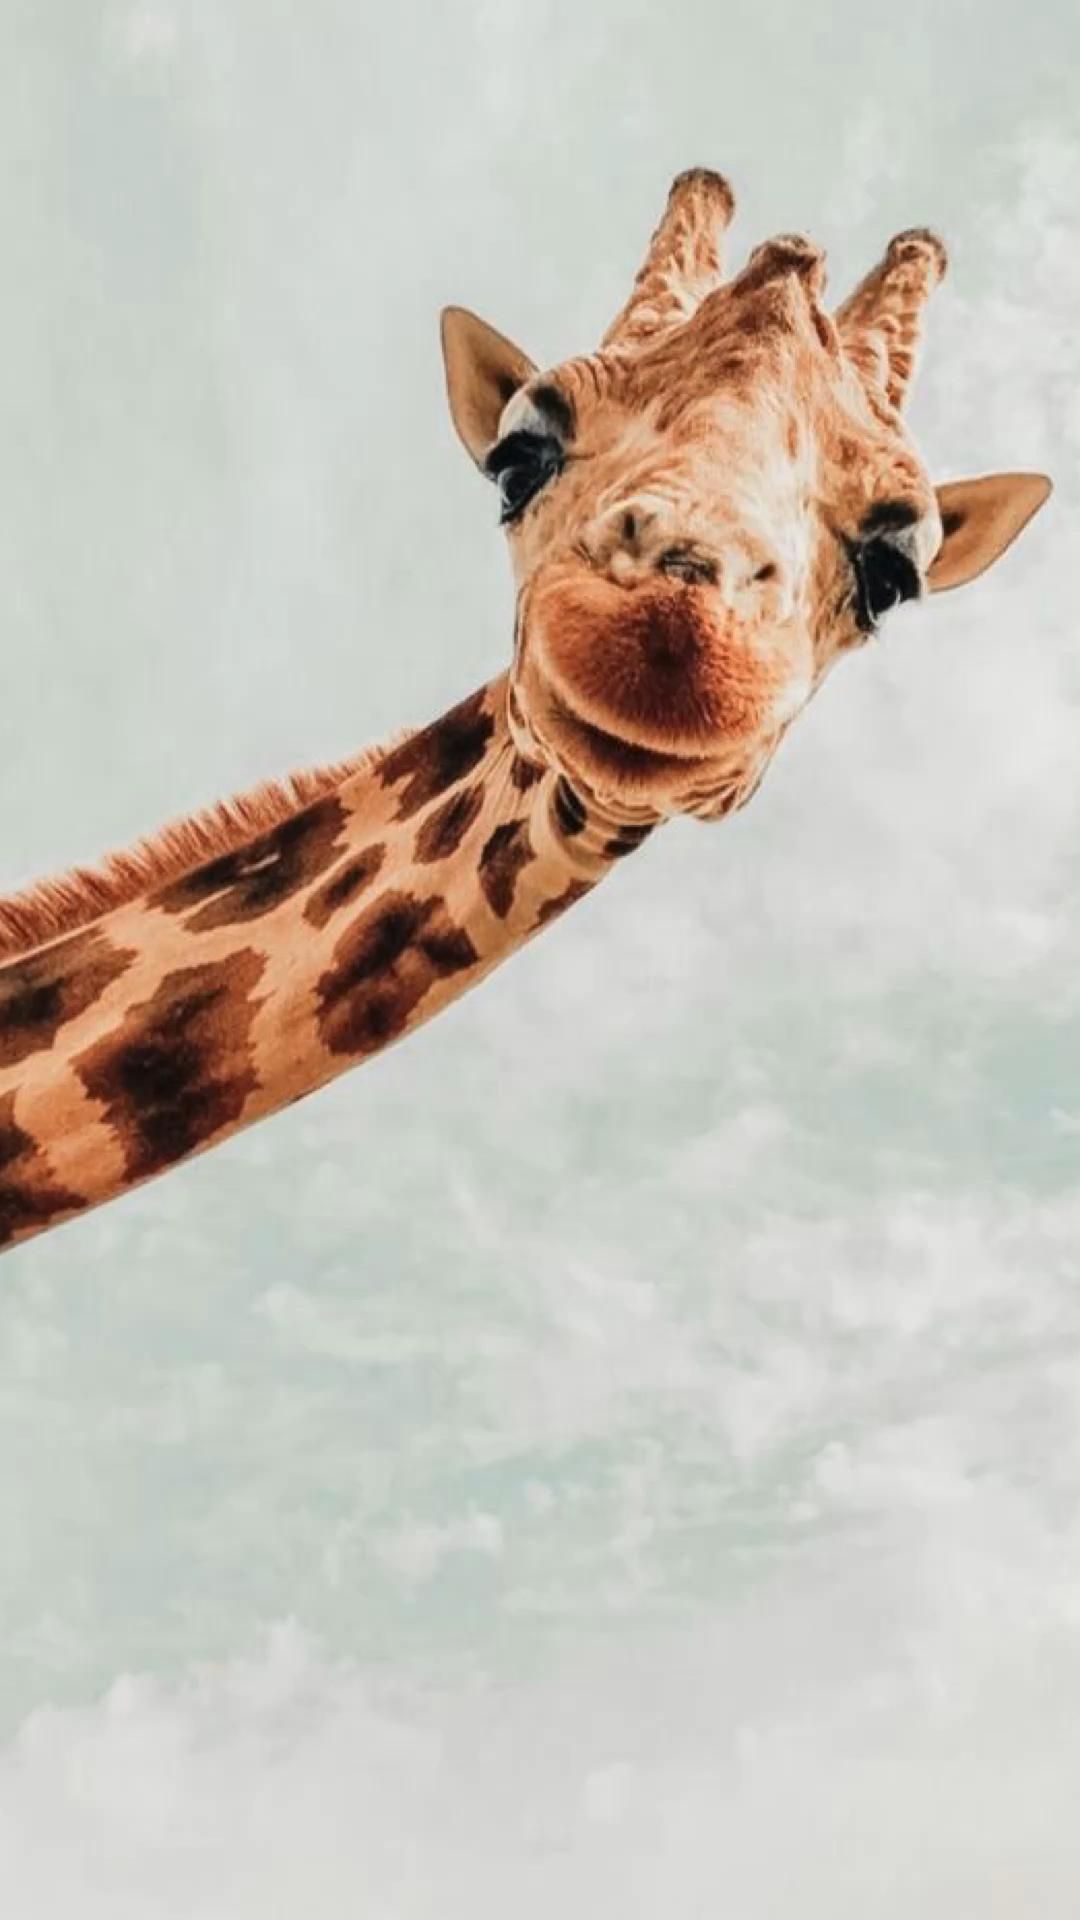 Cute giraffes to make you smile!. Giraffe picture, Cute animals image, Cute small animals